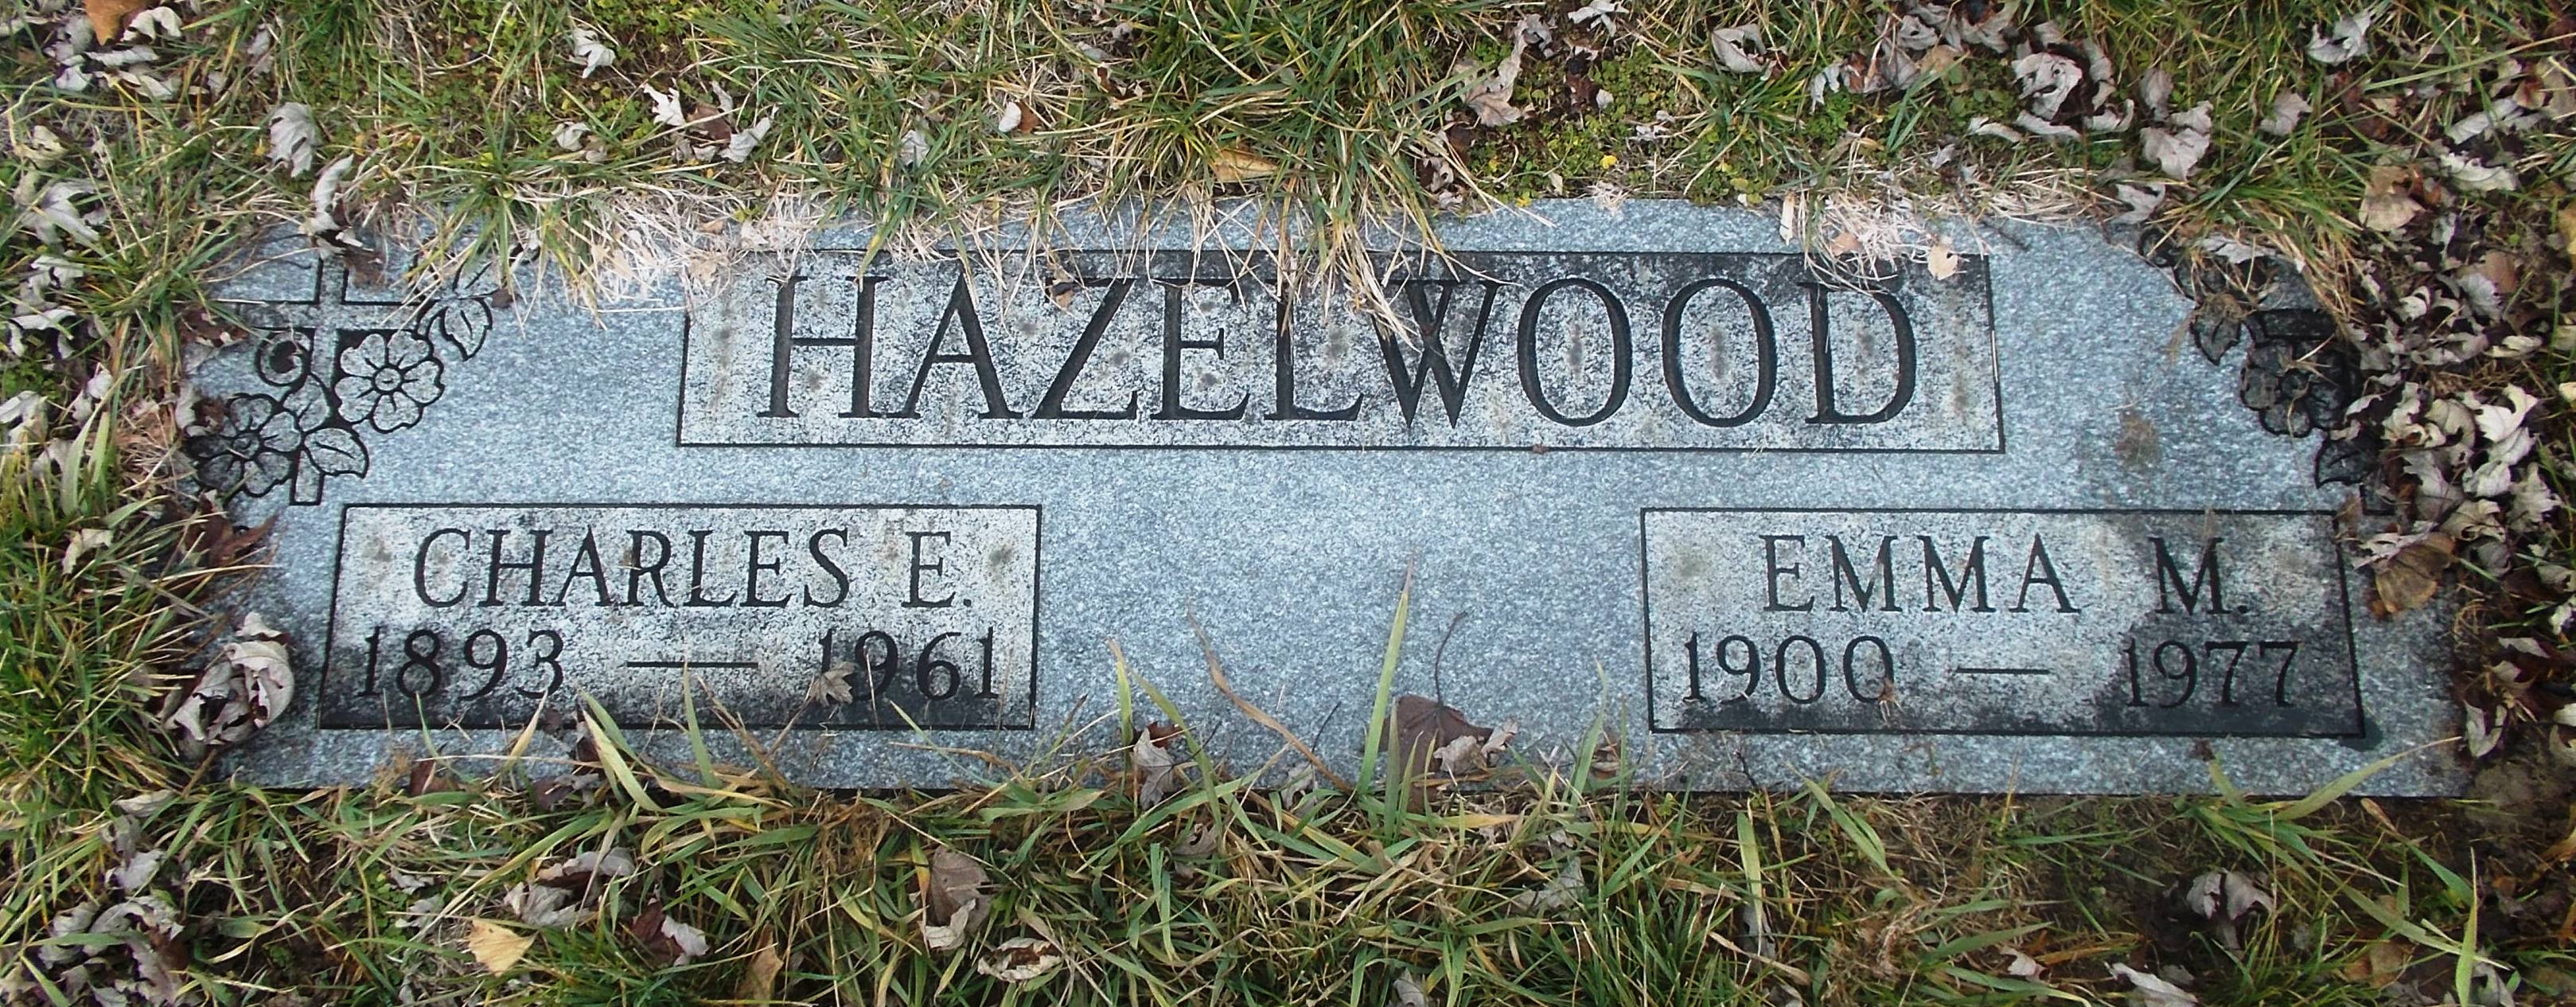 Charles E Hazelwood